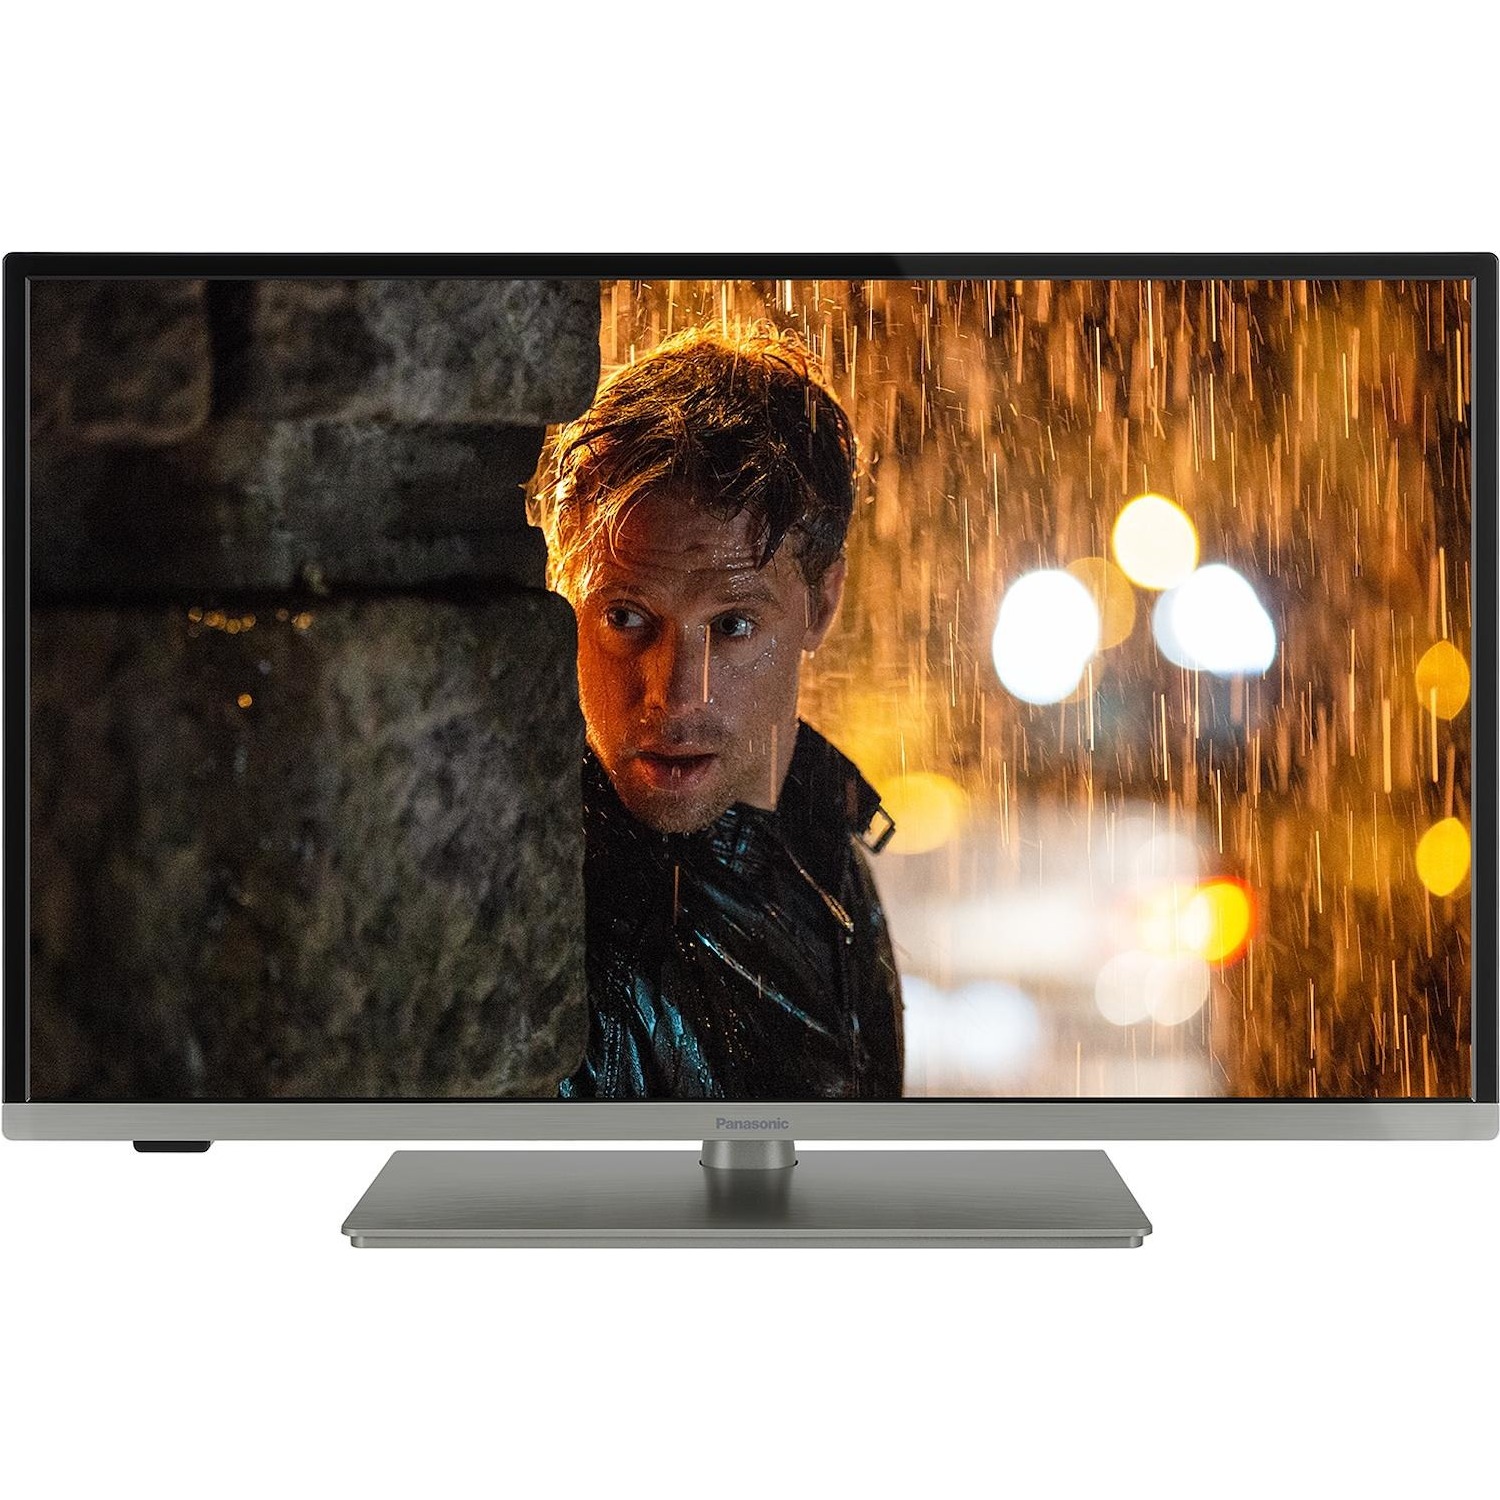 Immagine per TV LED Smart Panasonic 24JS350 da DIMOStore